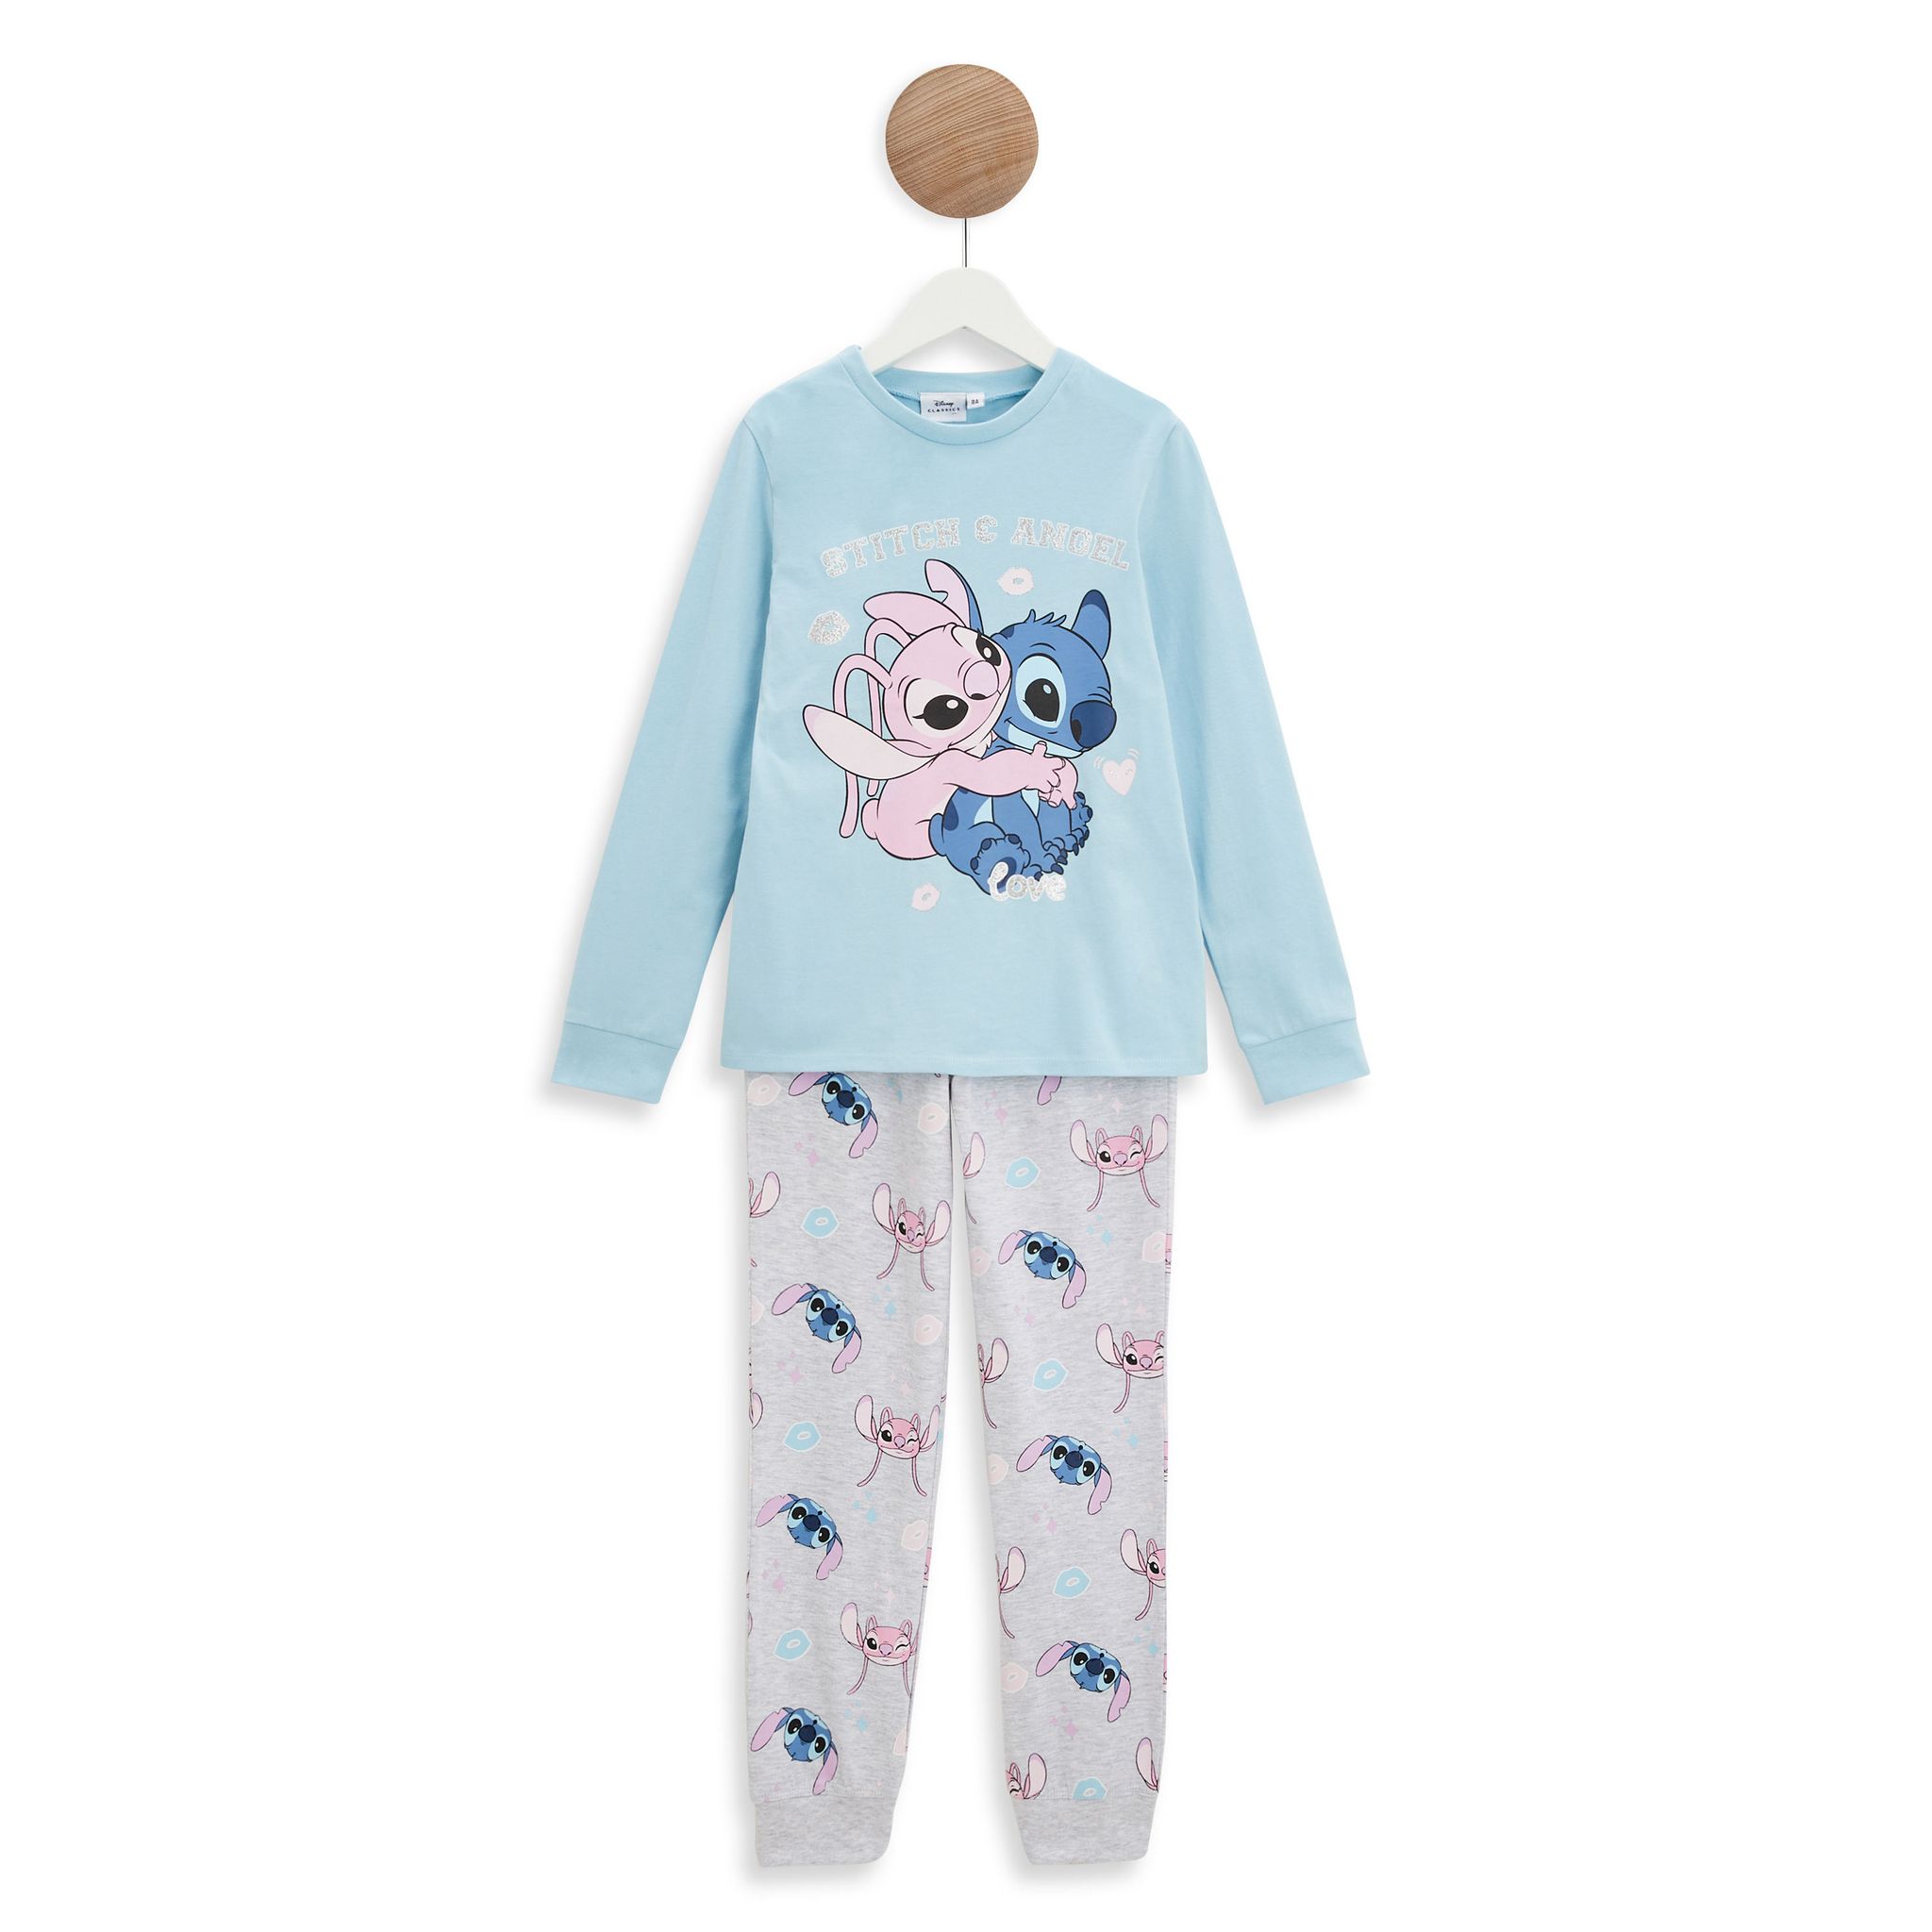 Pyjama stitch enfant